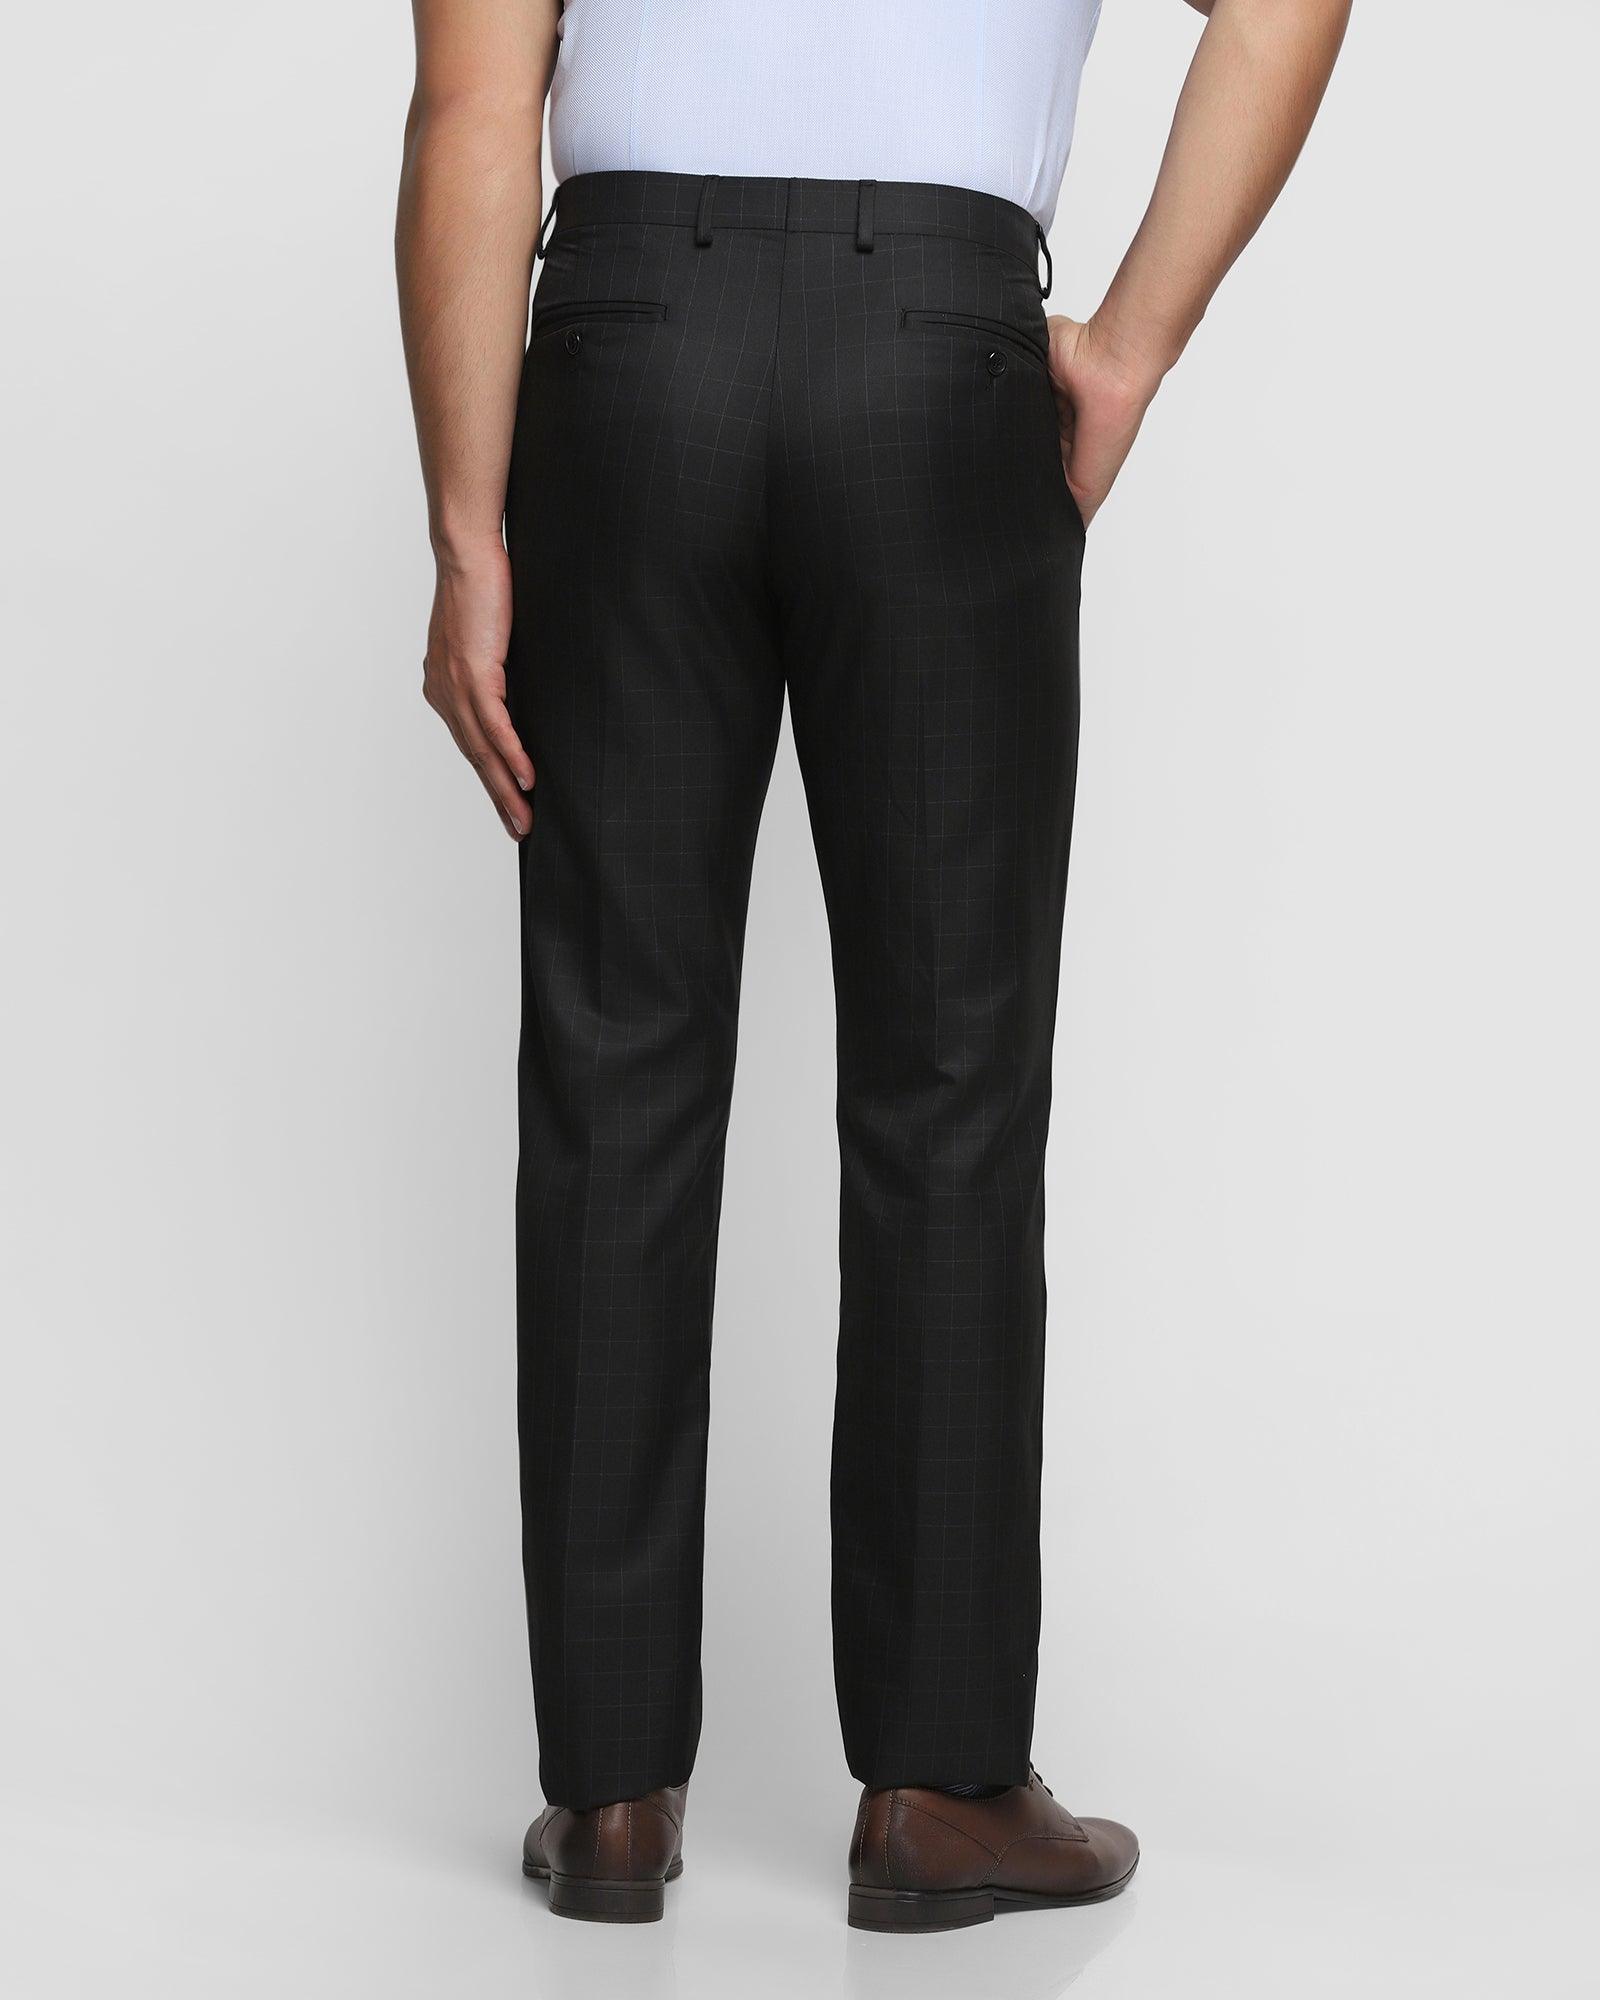 Men Check Trousers Formal Pants Office Business Suit Straight Leg Slim  Fashion | eBay